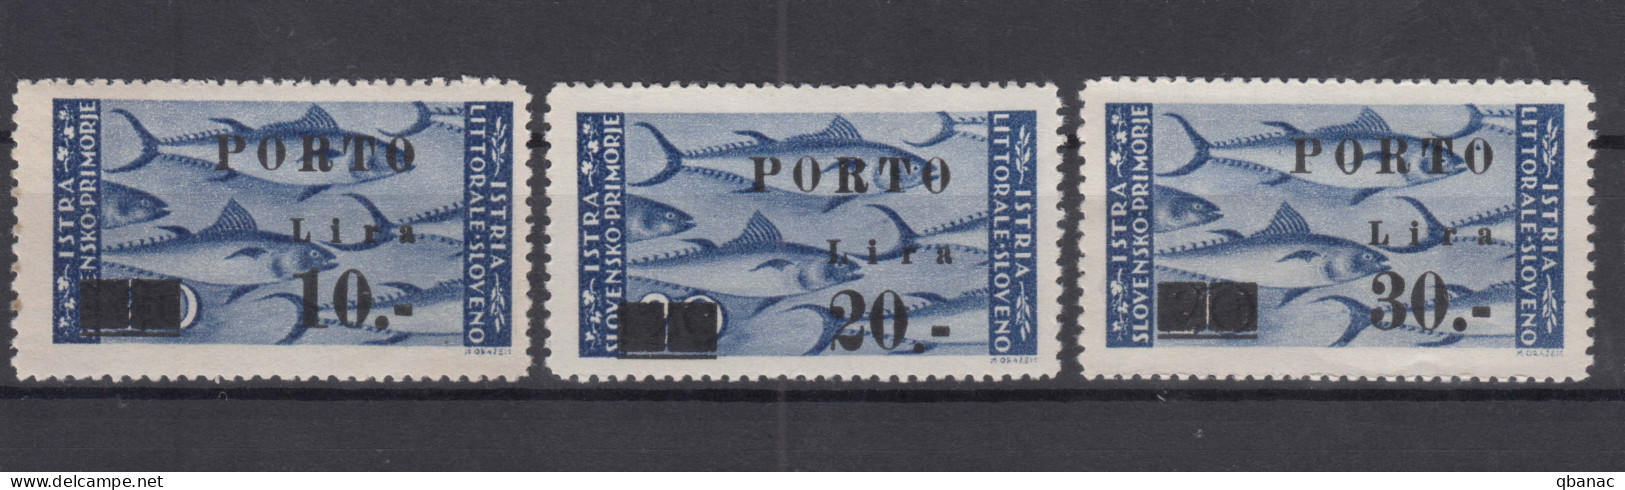 Istria Litorale Yugoslavia Occupation, Porto 1946 Sassone#17-19 Overprint II, Mint Never Hinged - Ocu. Yugoslava: Istria